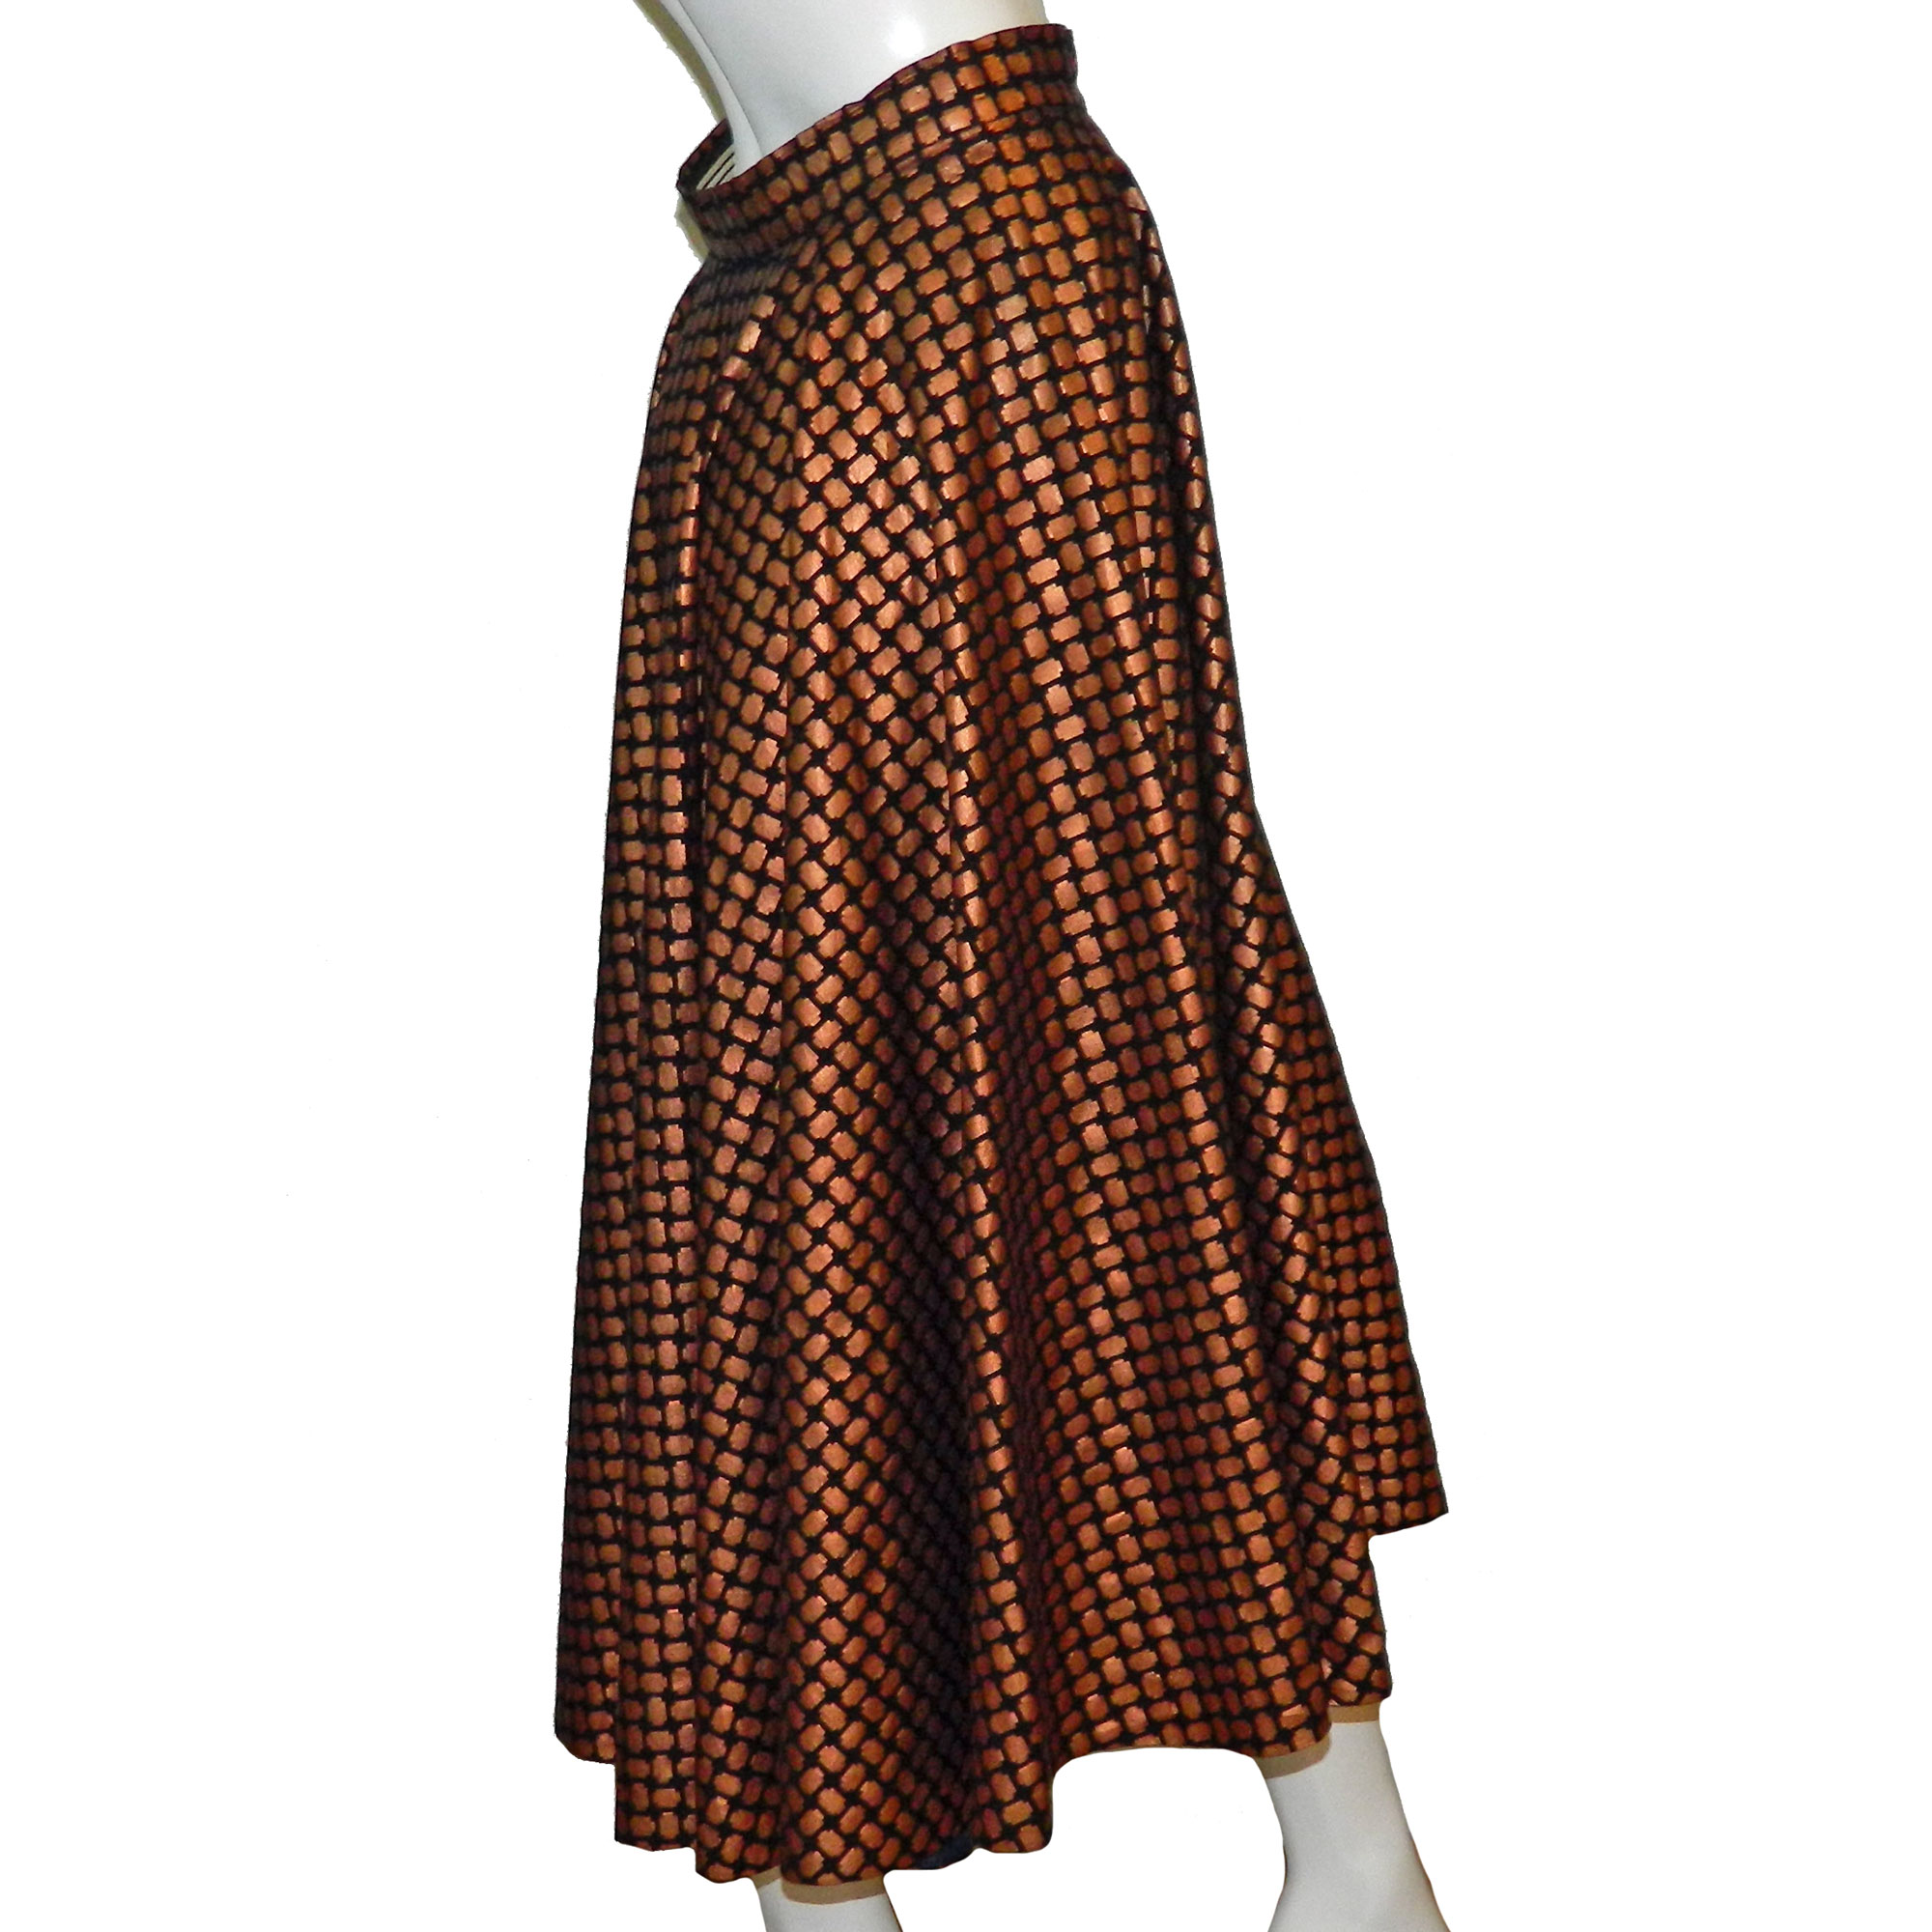 1950s copper circle skirt